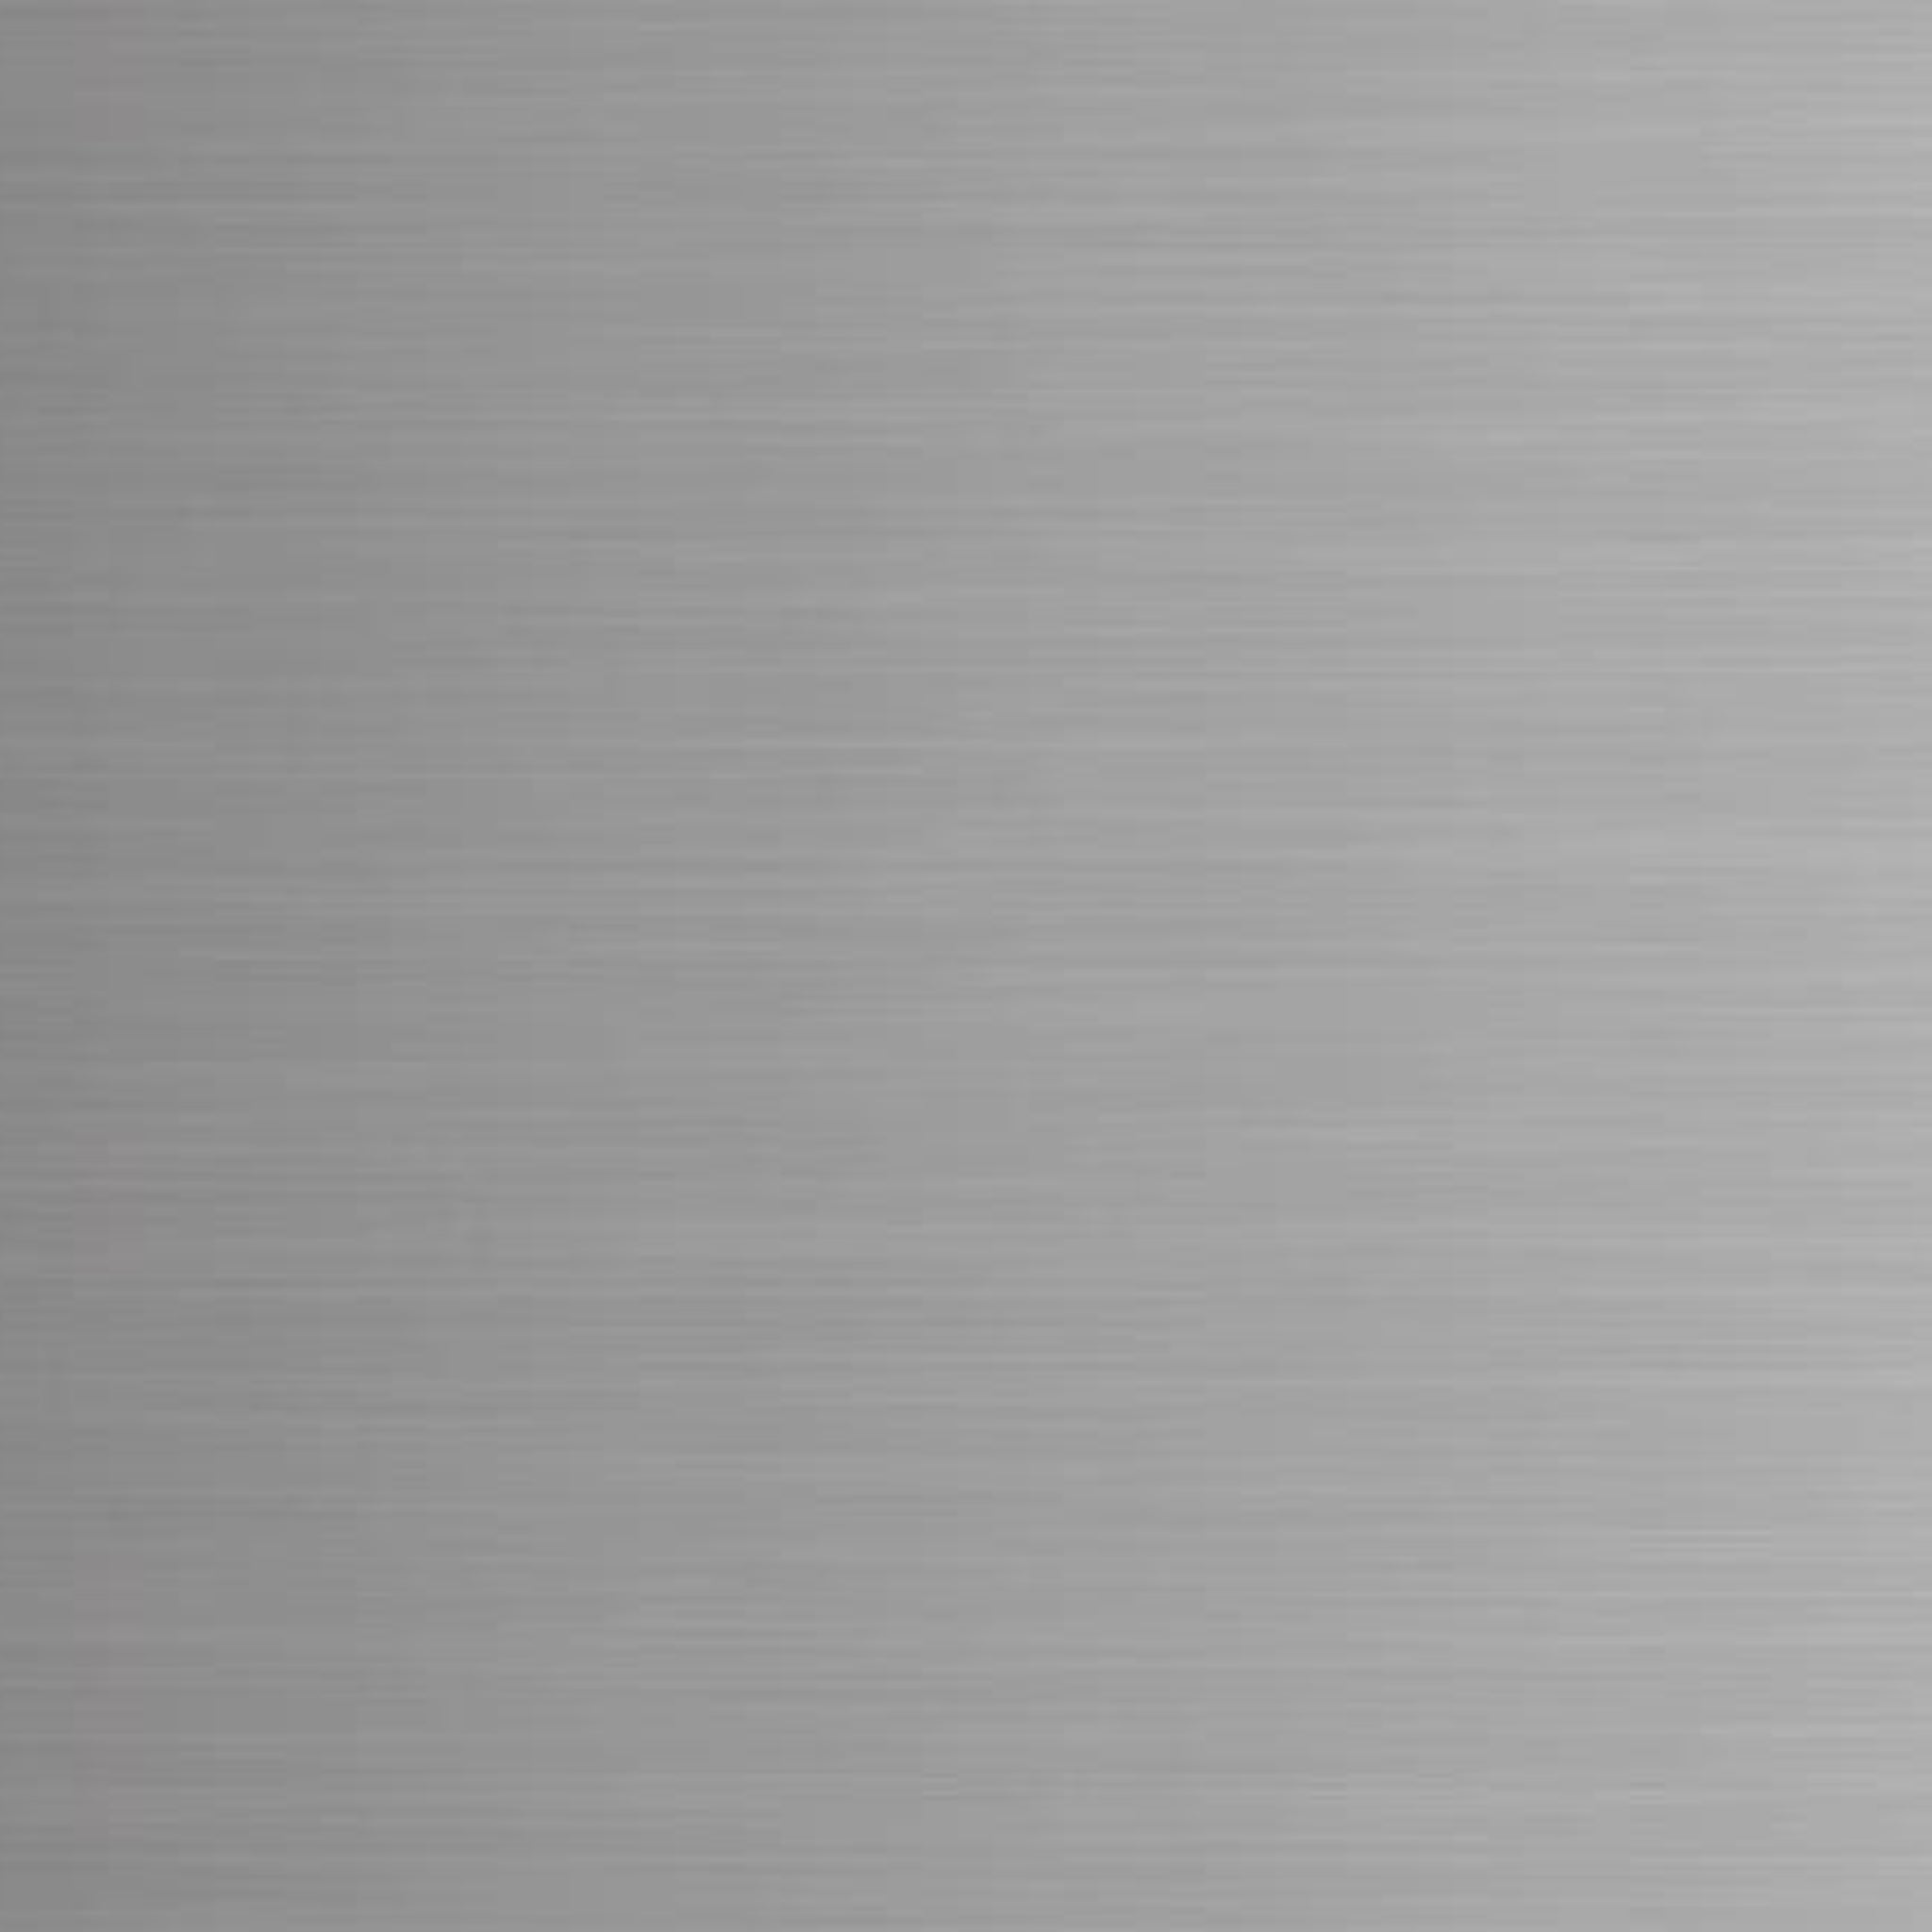 AULIC CANTERBURY LED MIRROR BRUSHED NICKEL 500MM SAMPLE